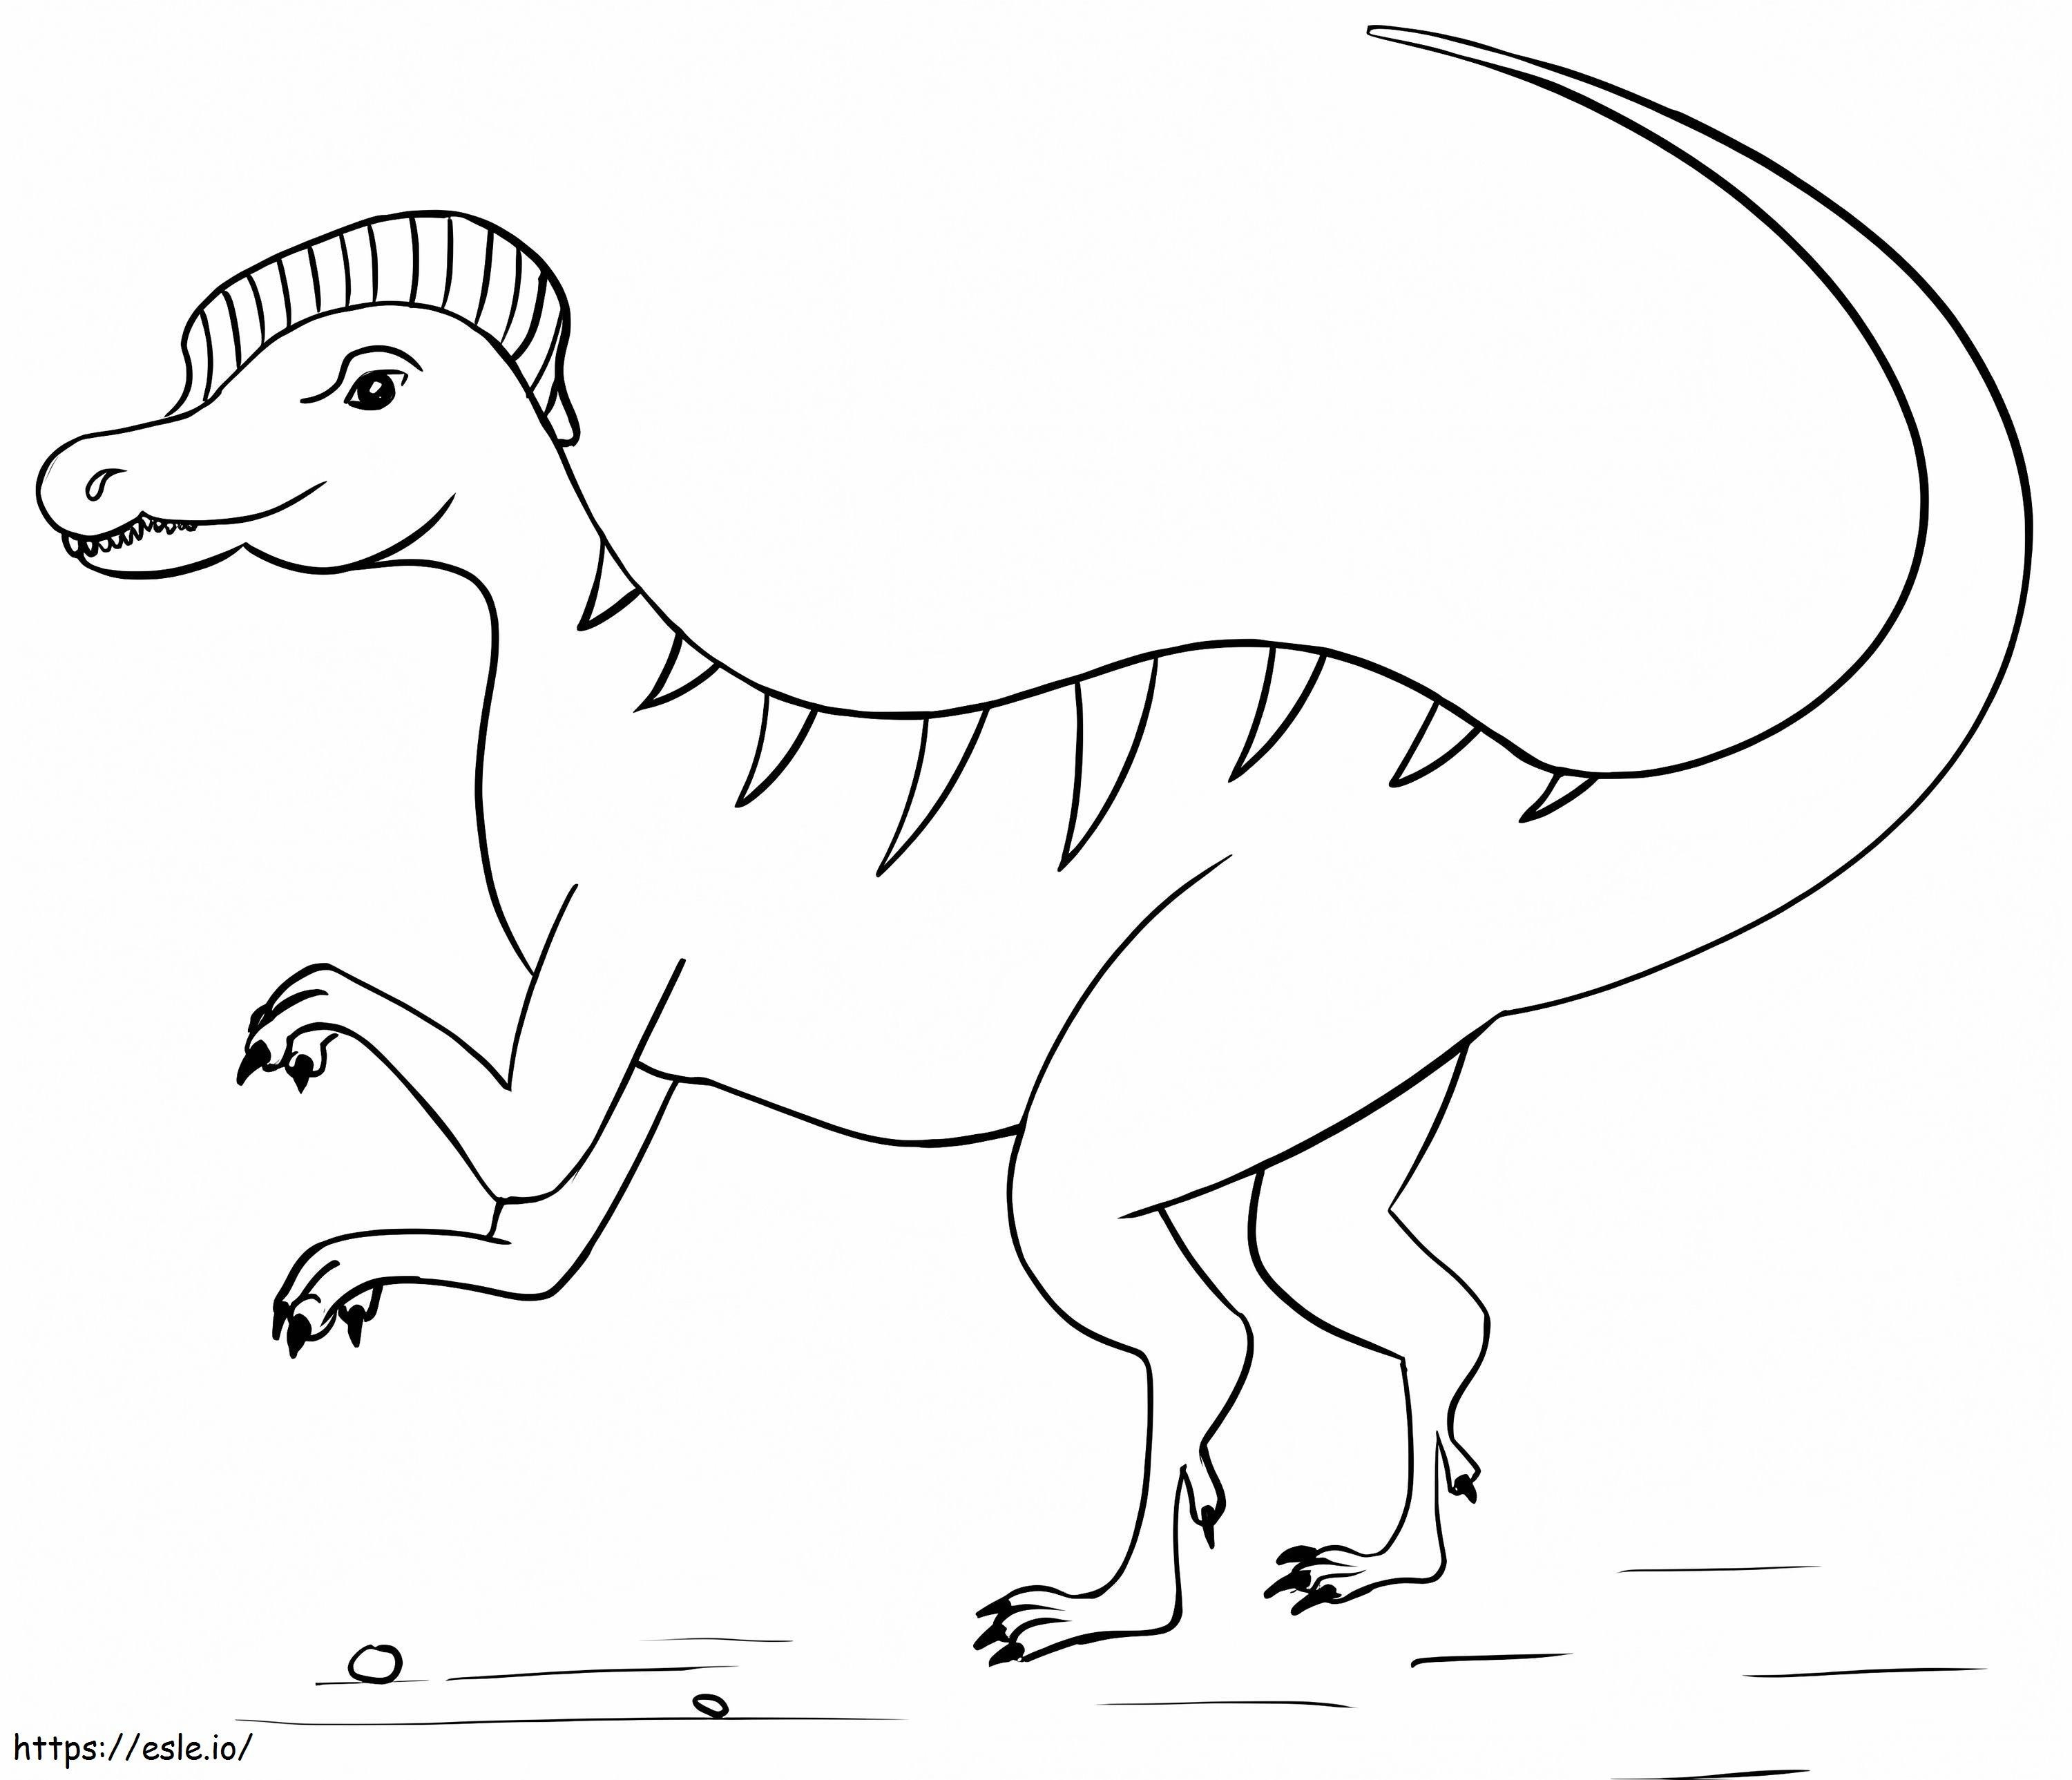 Dilophosaurus 2 coloring page